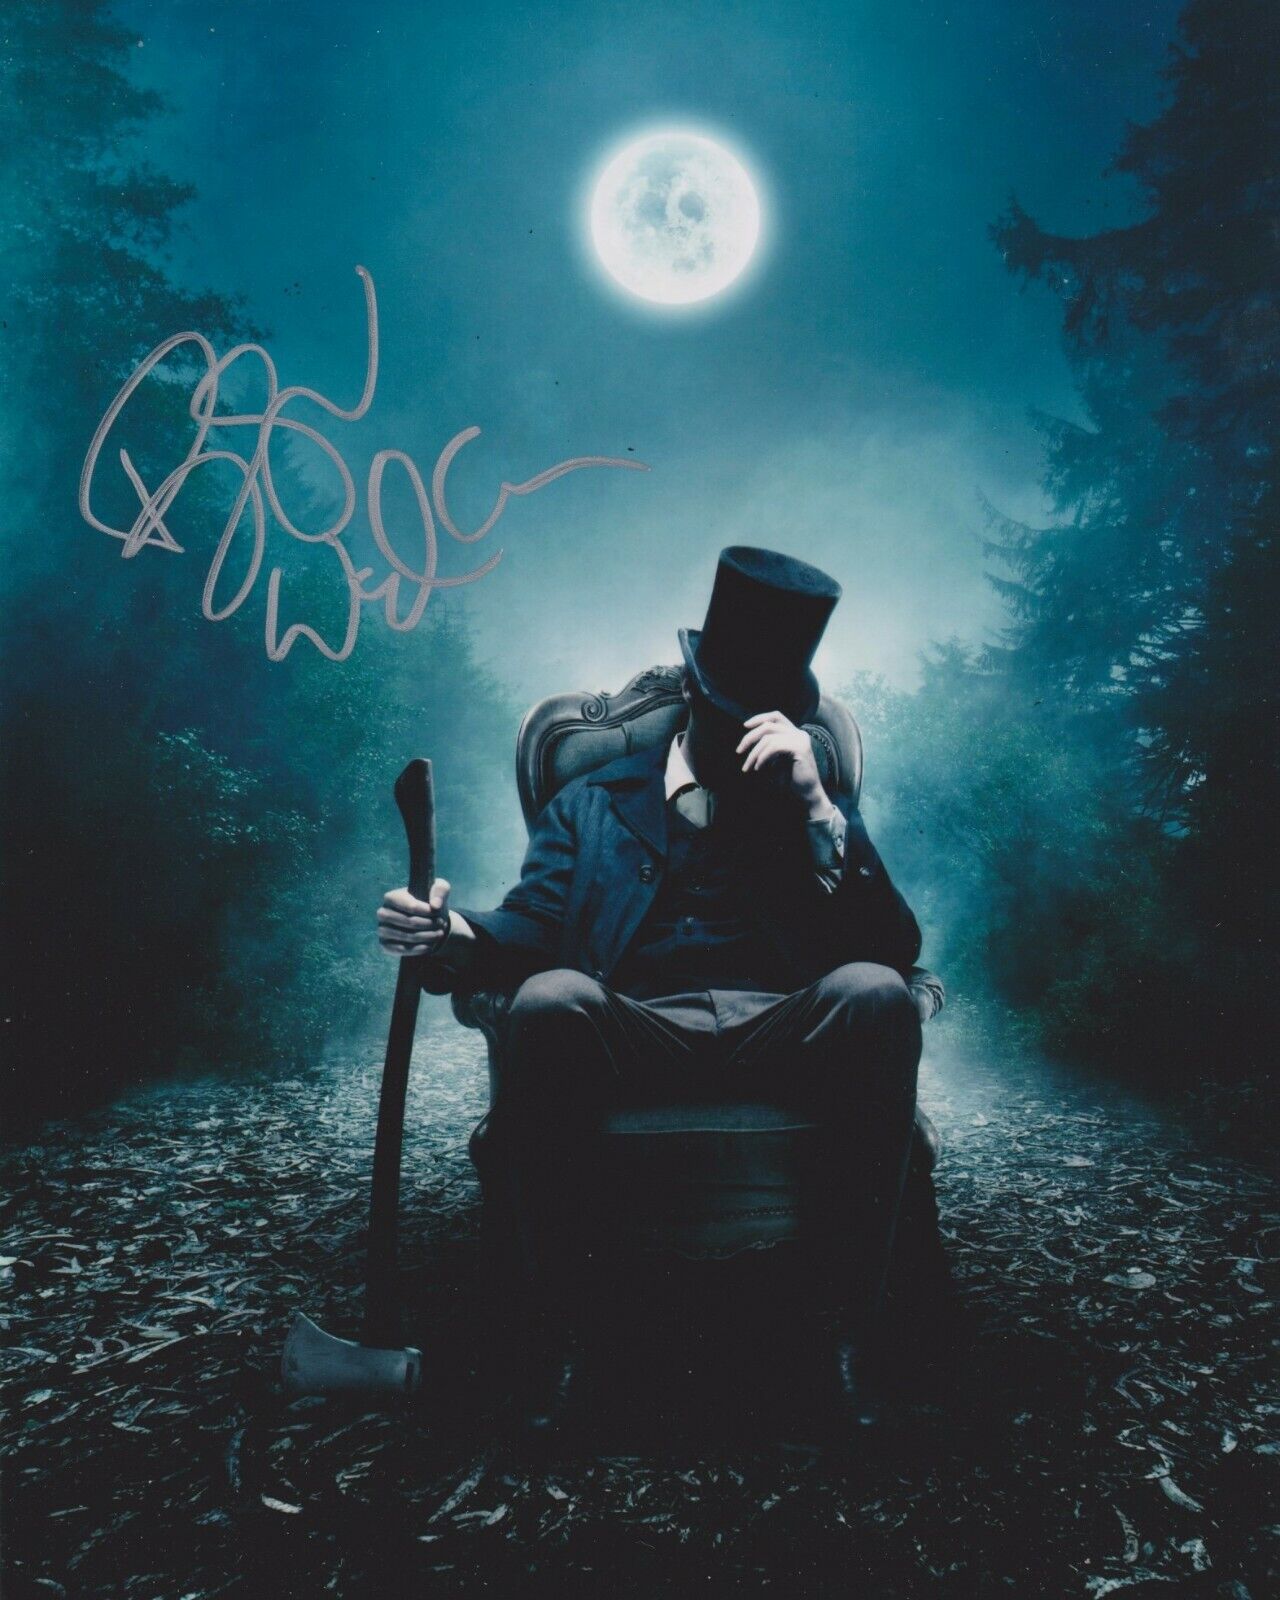 Benjamin Walker Signed Abraham Lincoln: Vampire Hunter 10x8 Photo Poster painting AFTAL